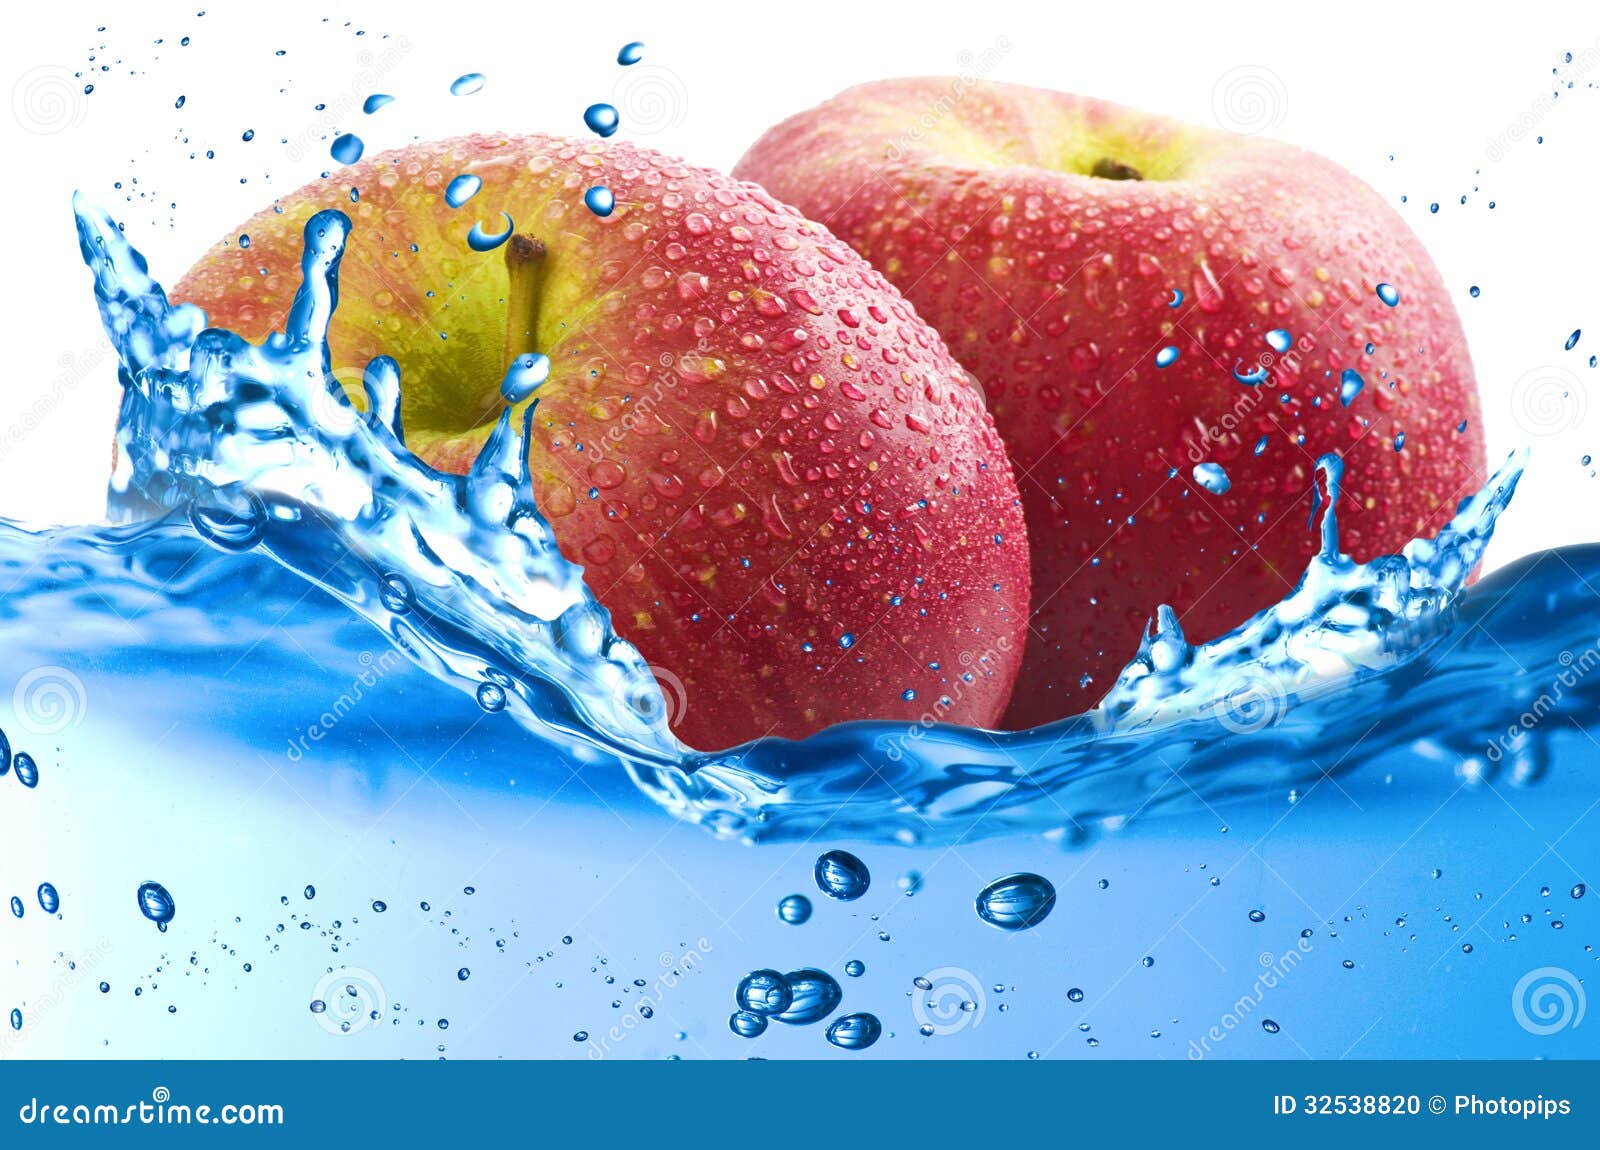 Apples splash stock photo. Image of moisture, drink, blue - 32538820